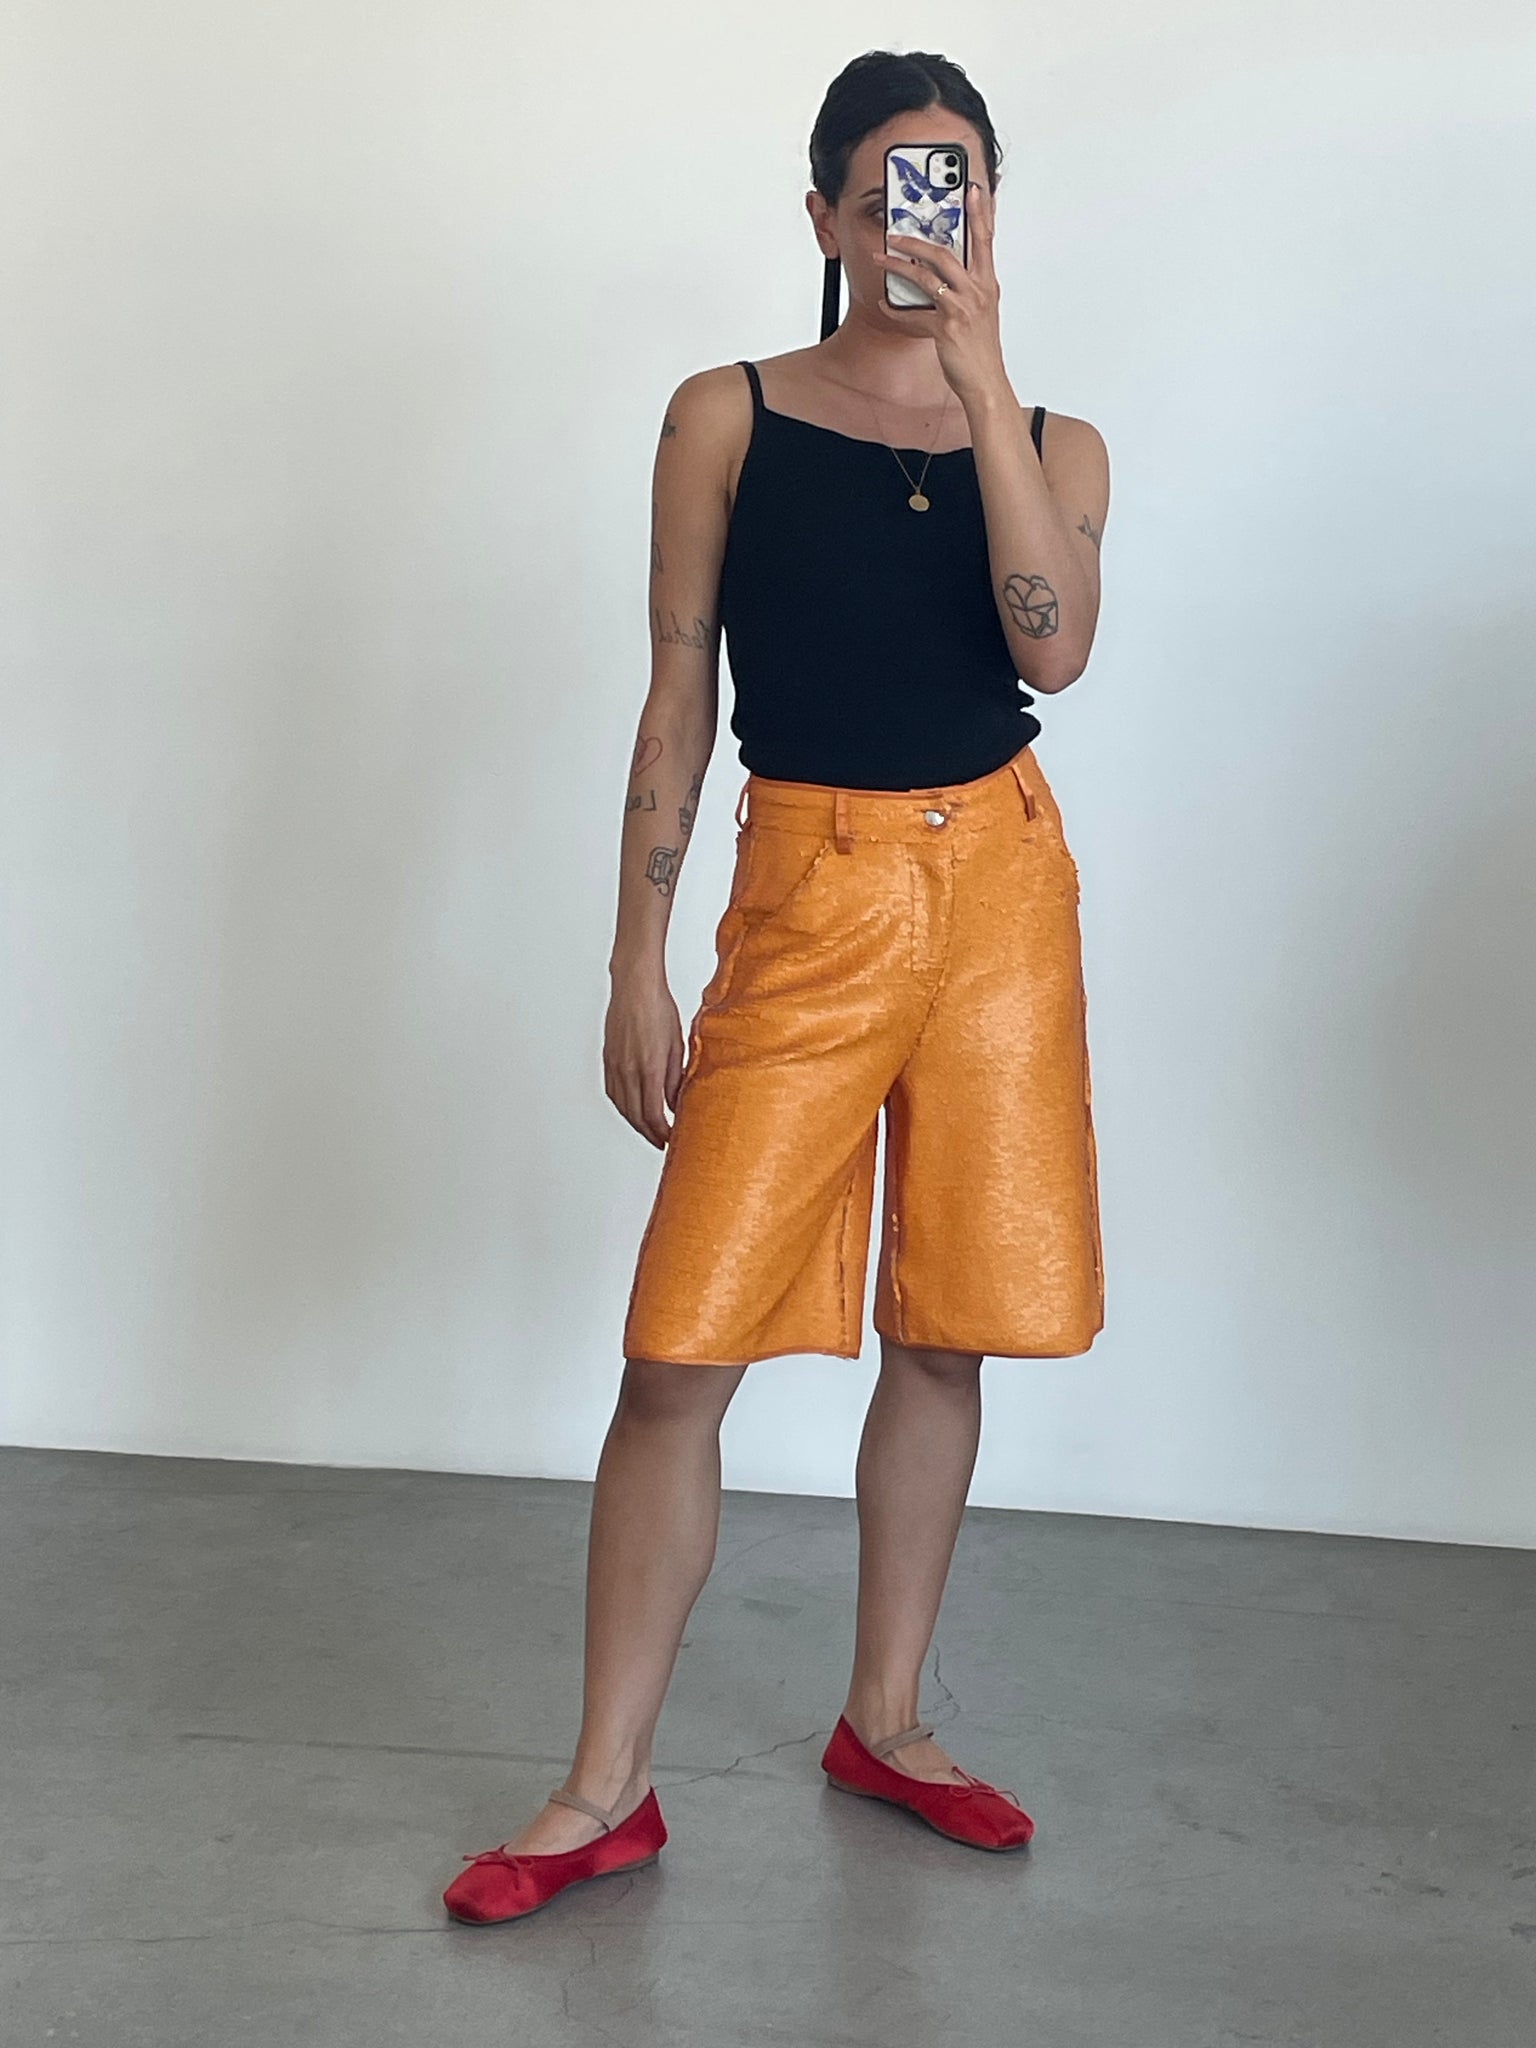 SM matte sequin orange long short